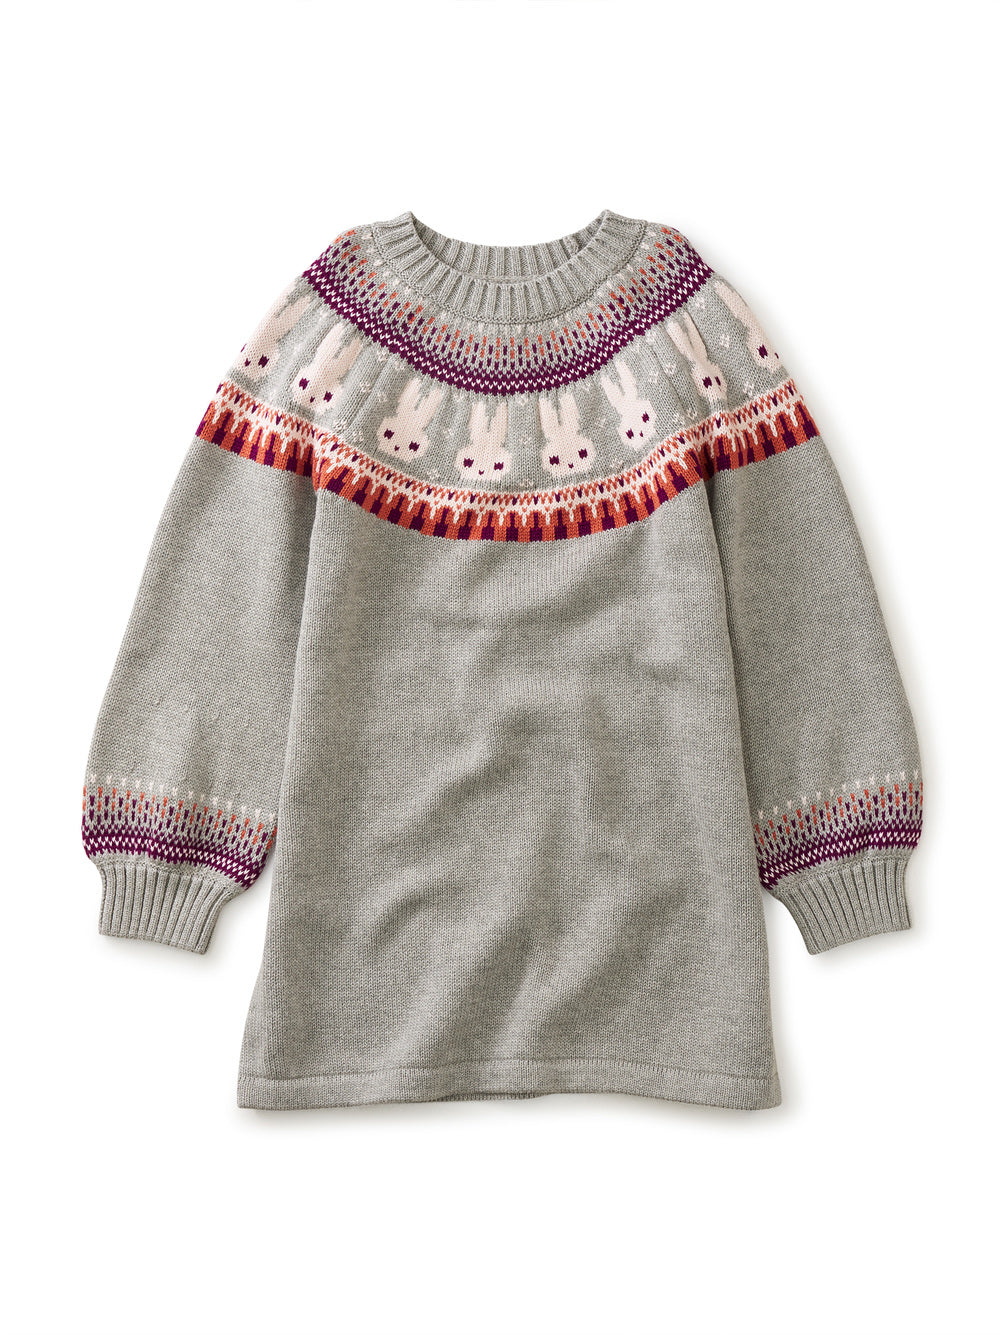 NWT Tea Collection Bunny Fair Isle Sweater Dress